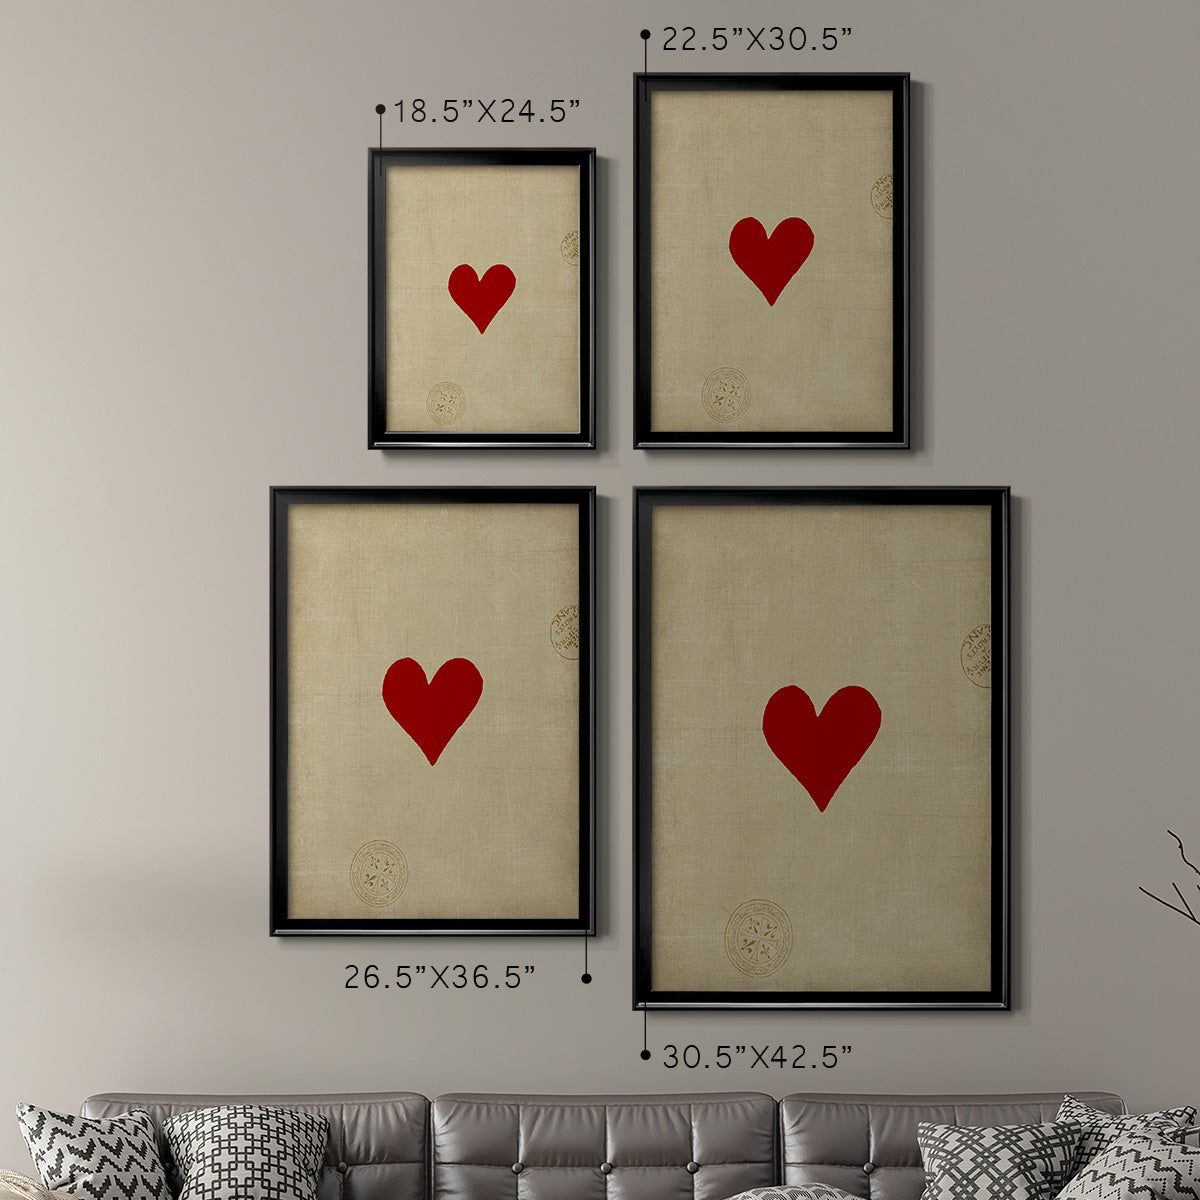 Heart Premium Framed Print - Ready to Hang